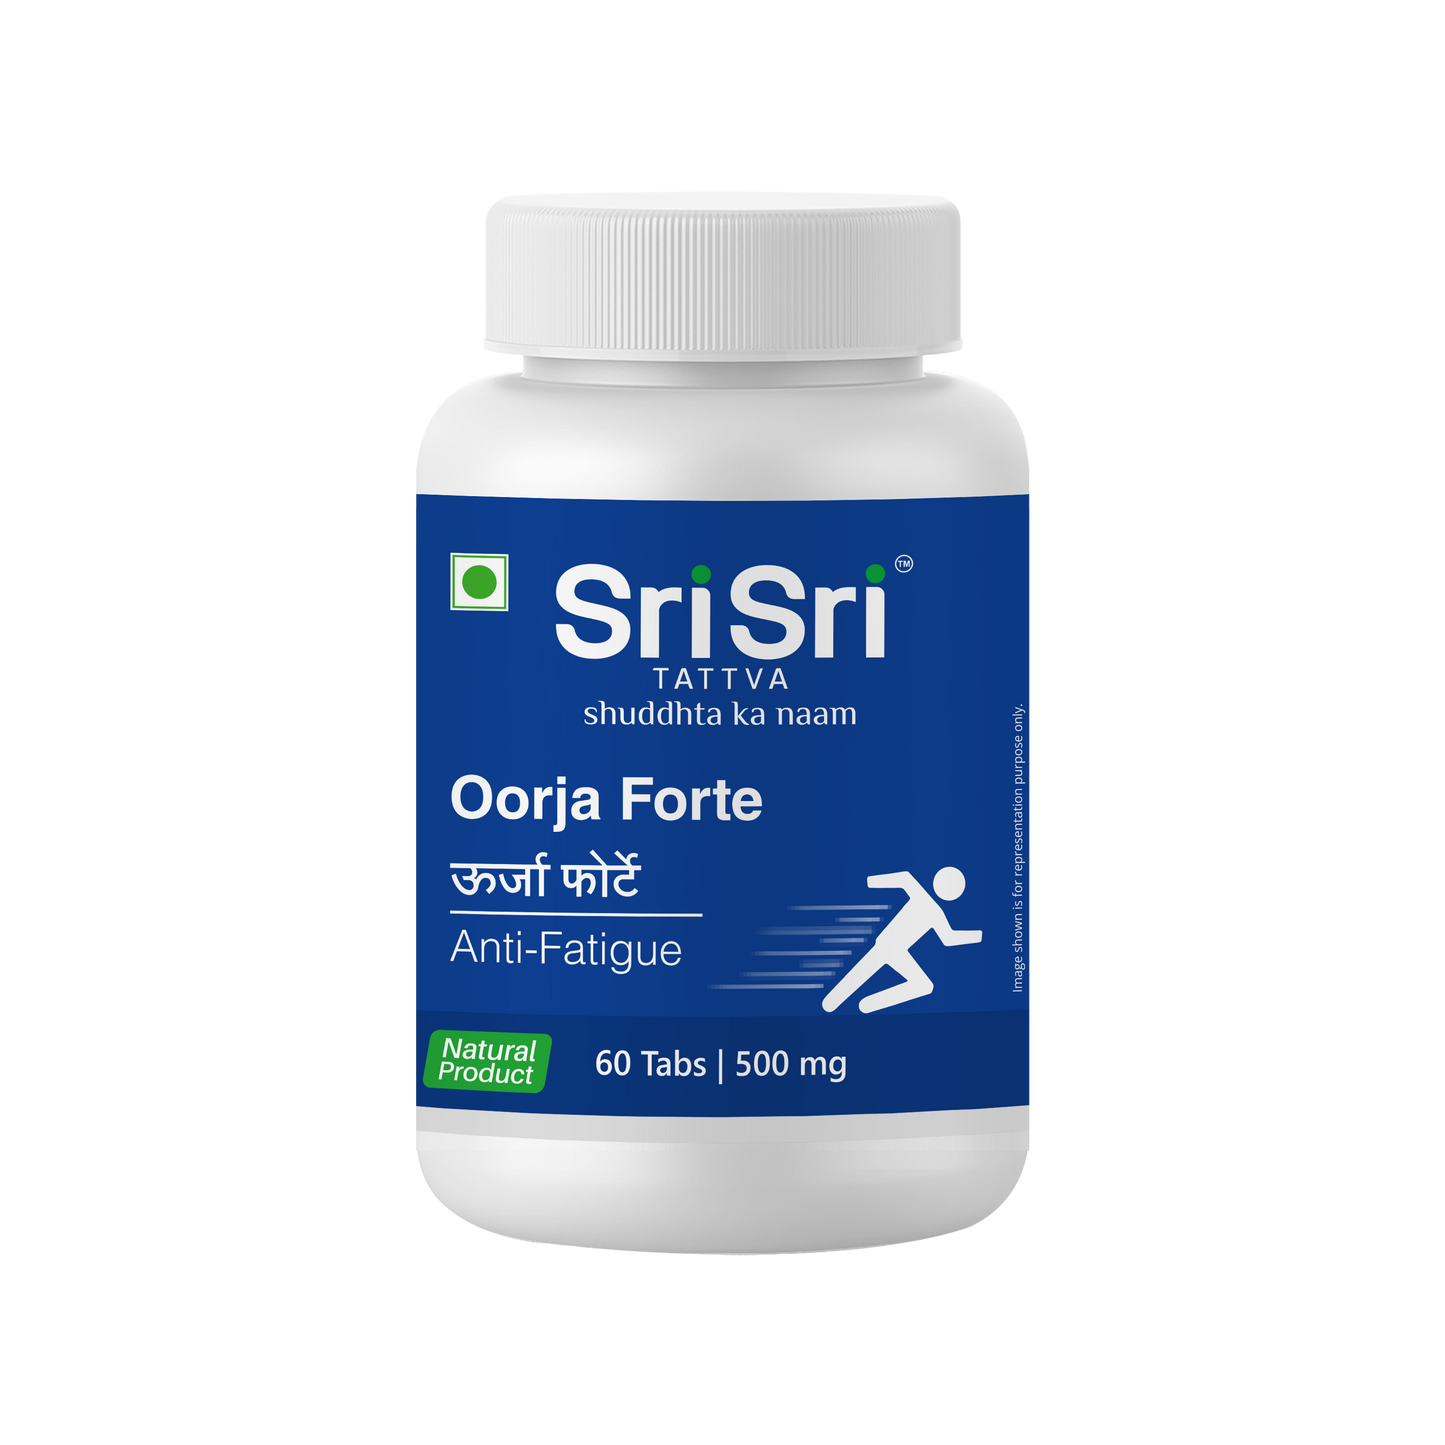 Oorja Forte | A Wonderful Blend Of Rejuvenating Ayurvedic Herbs To Improve Stamina & Relieve Fatigue | 60 Tabs, 500 mg